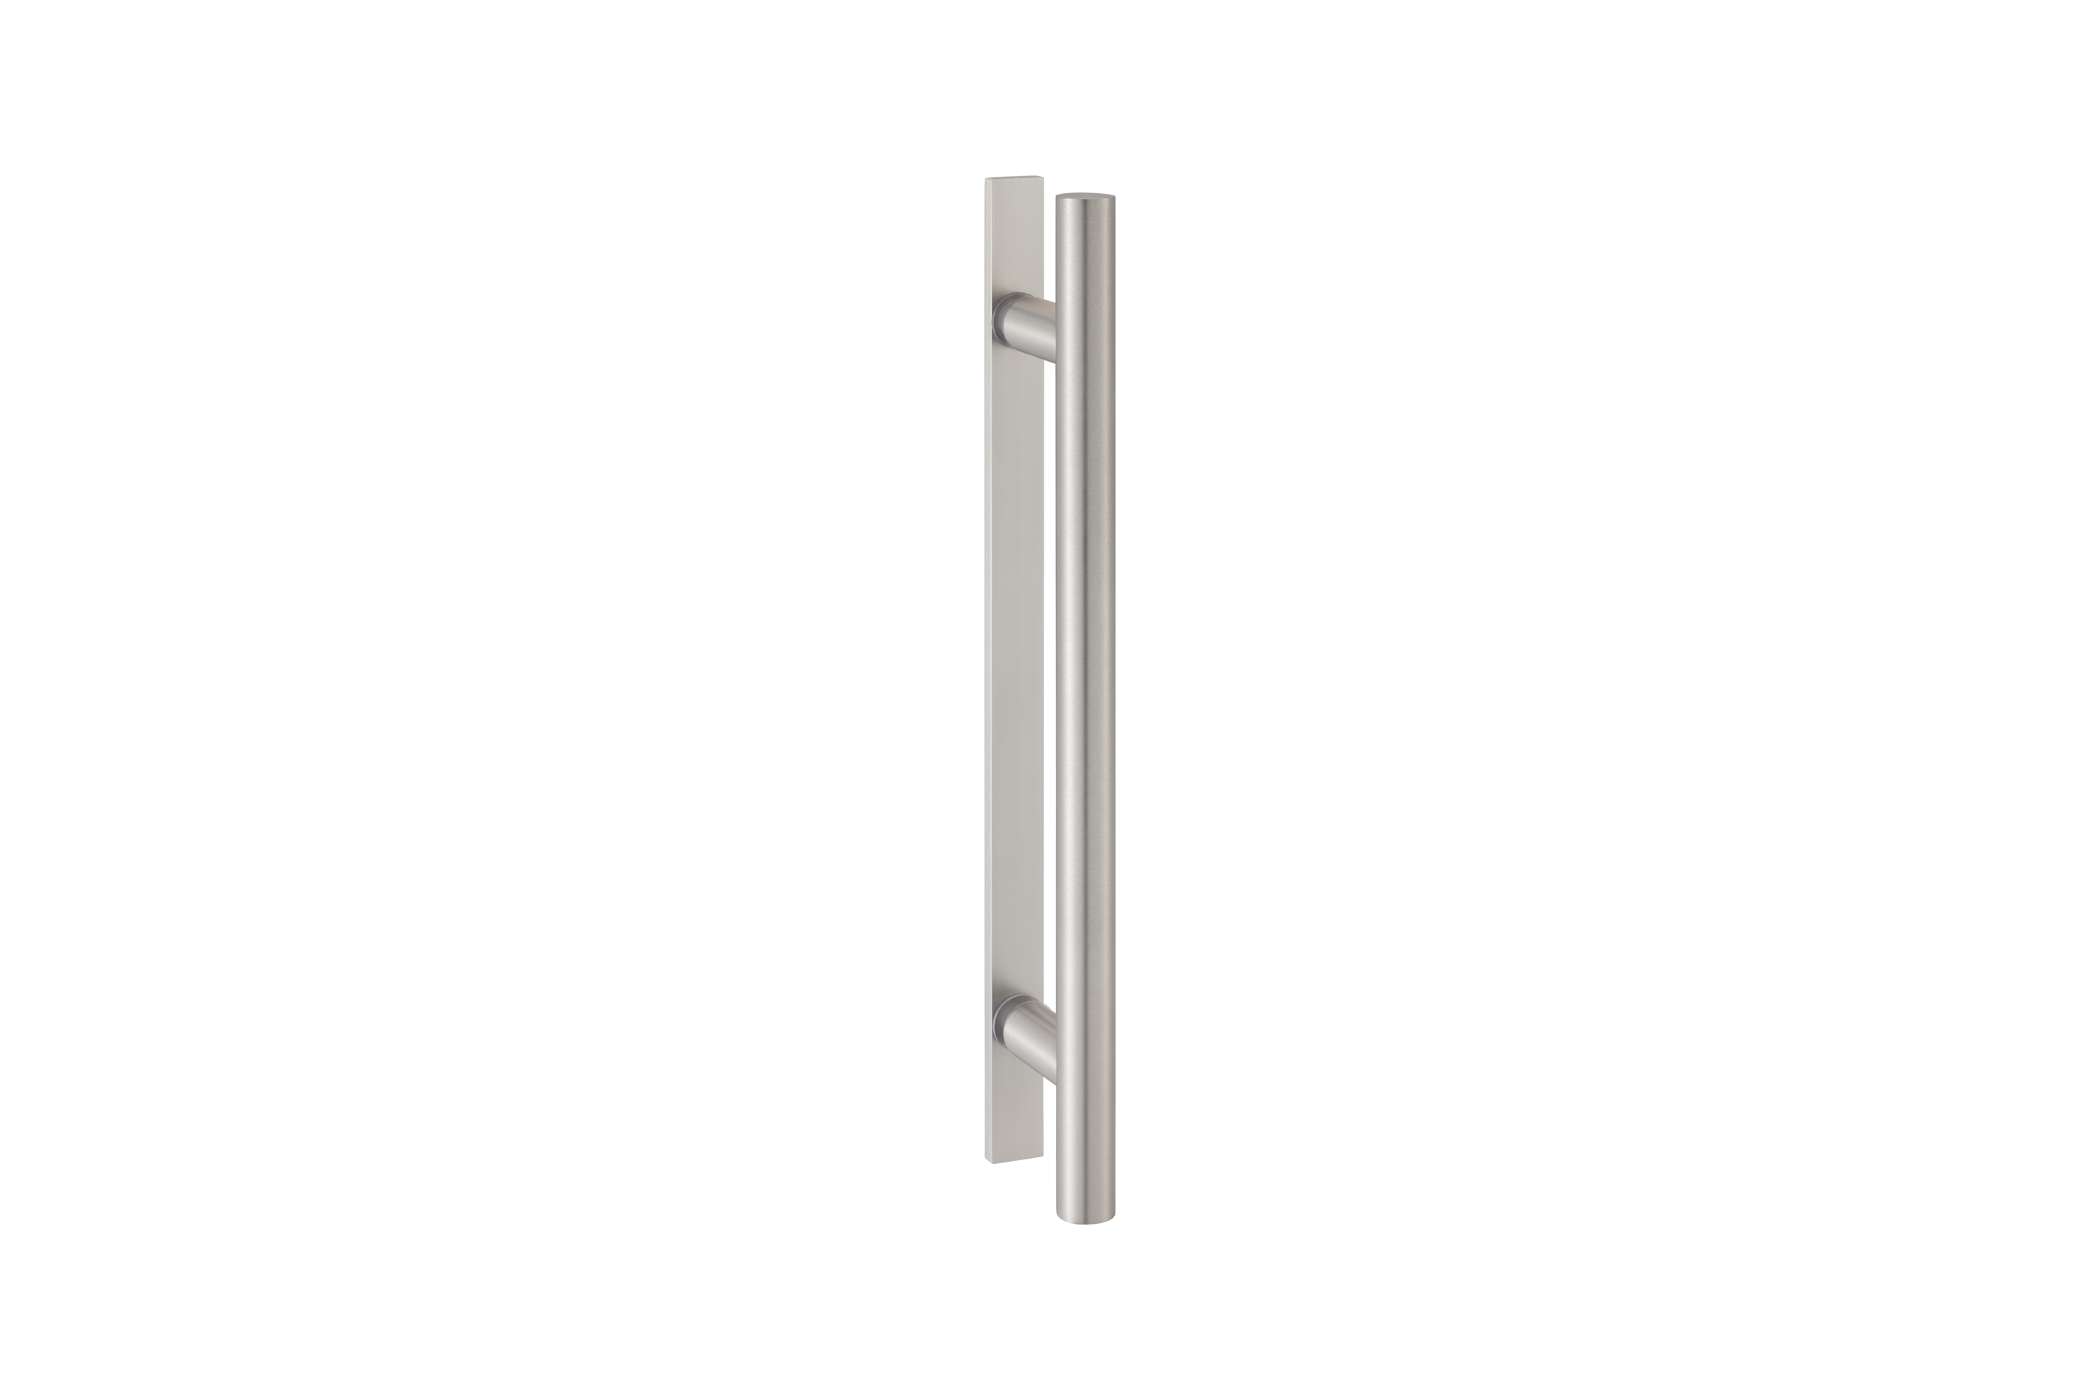 KWS Pair of door handles 8146 in finish 35 (aluminium, stainless steel effect anodised)